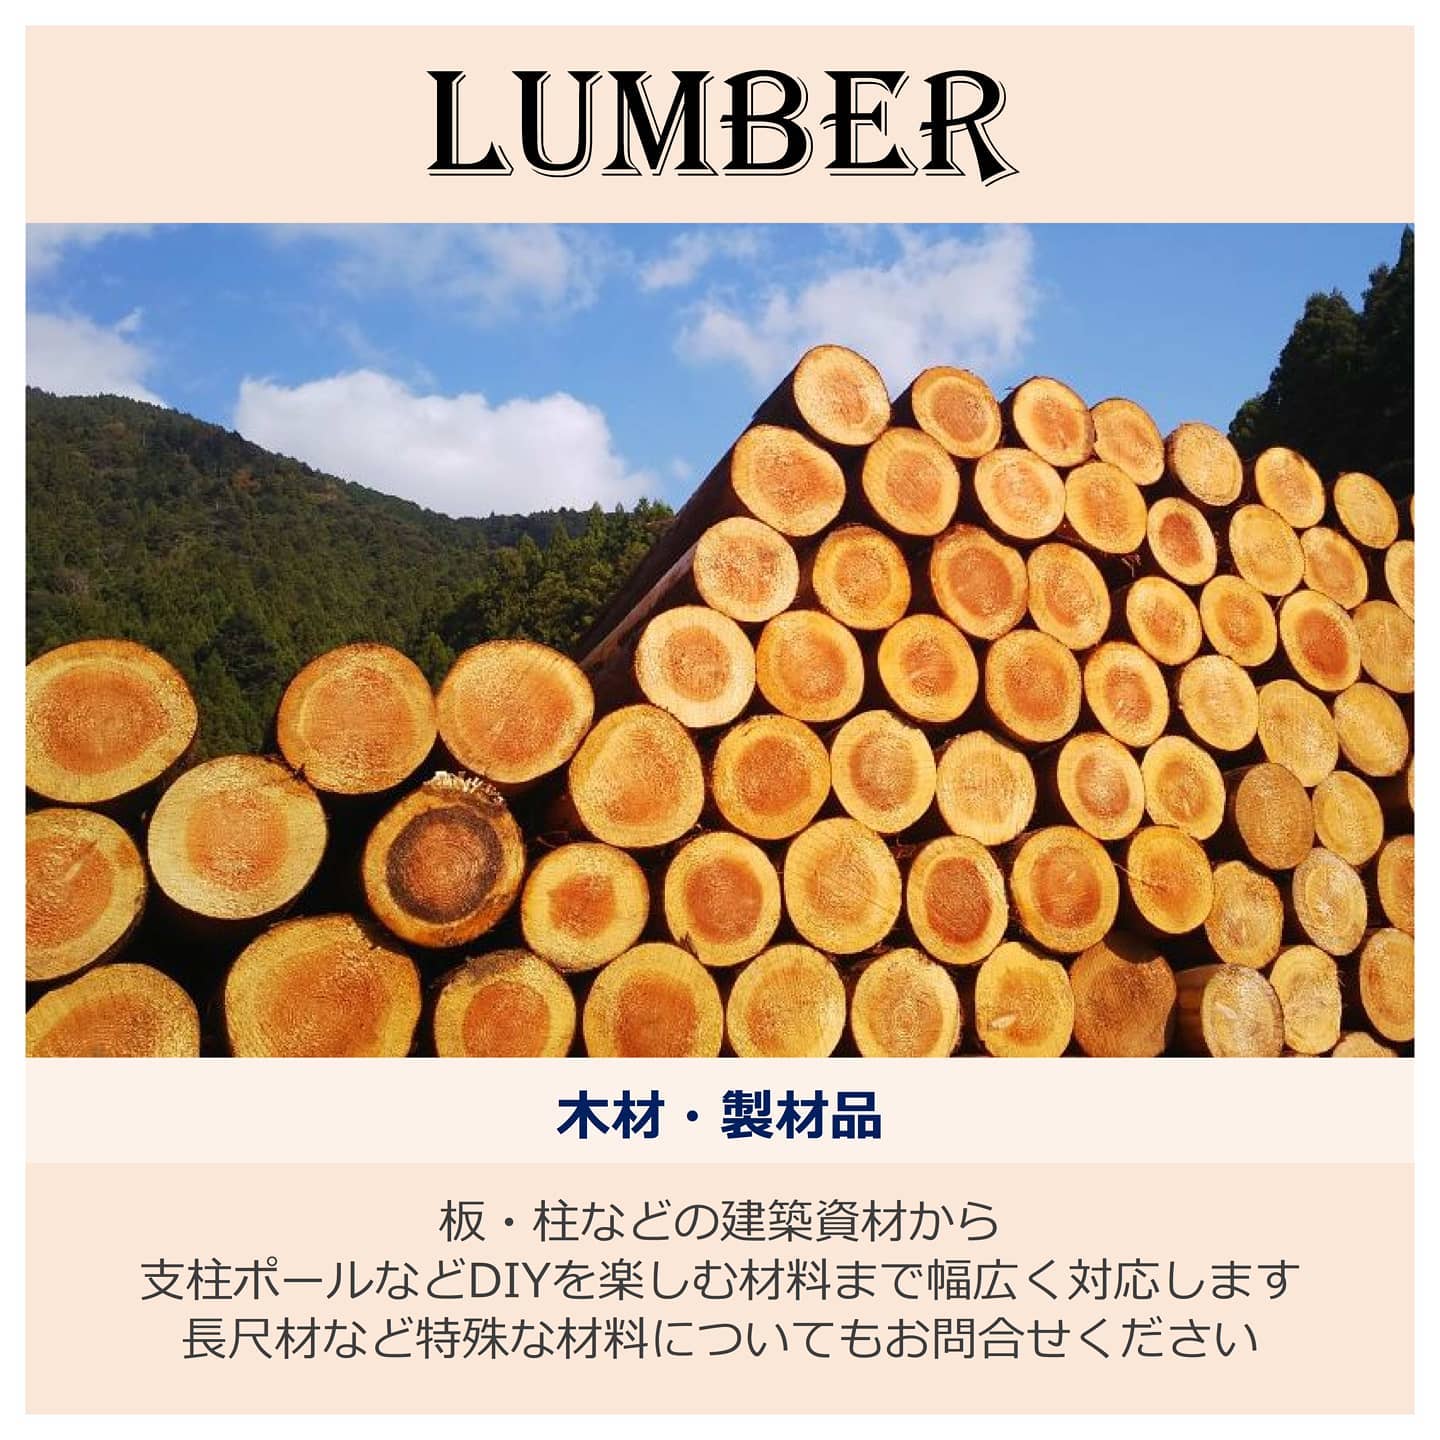 Lumber -材木- 用途にあわせた製材品など